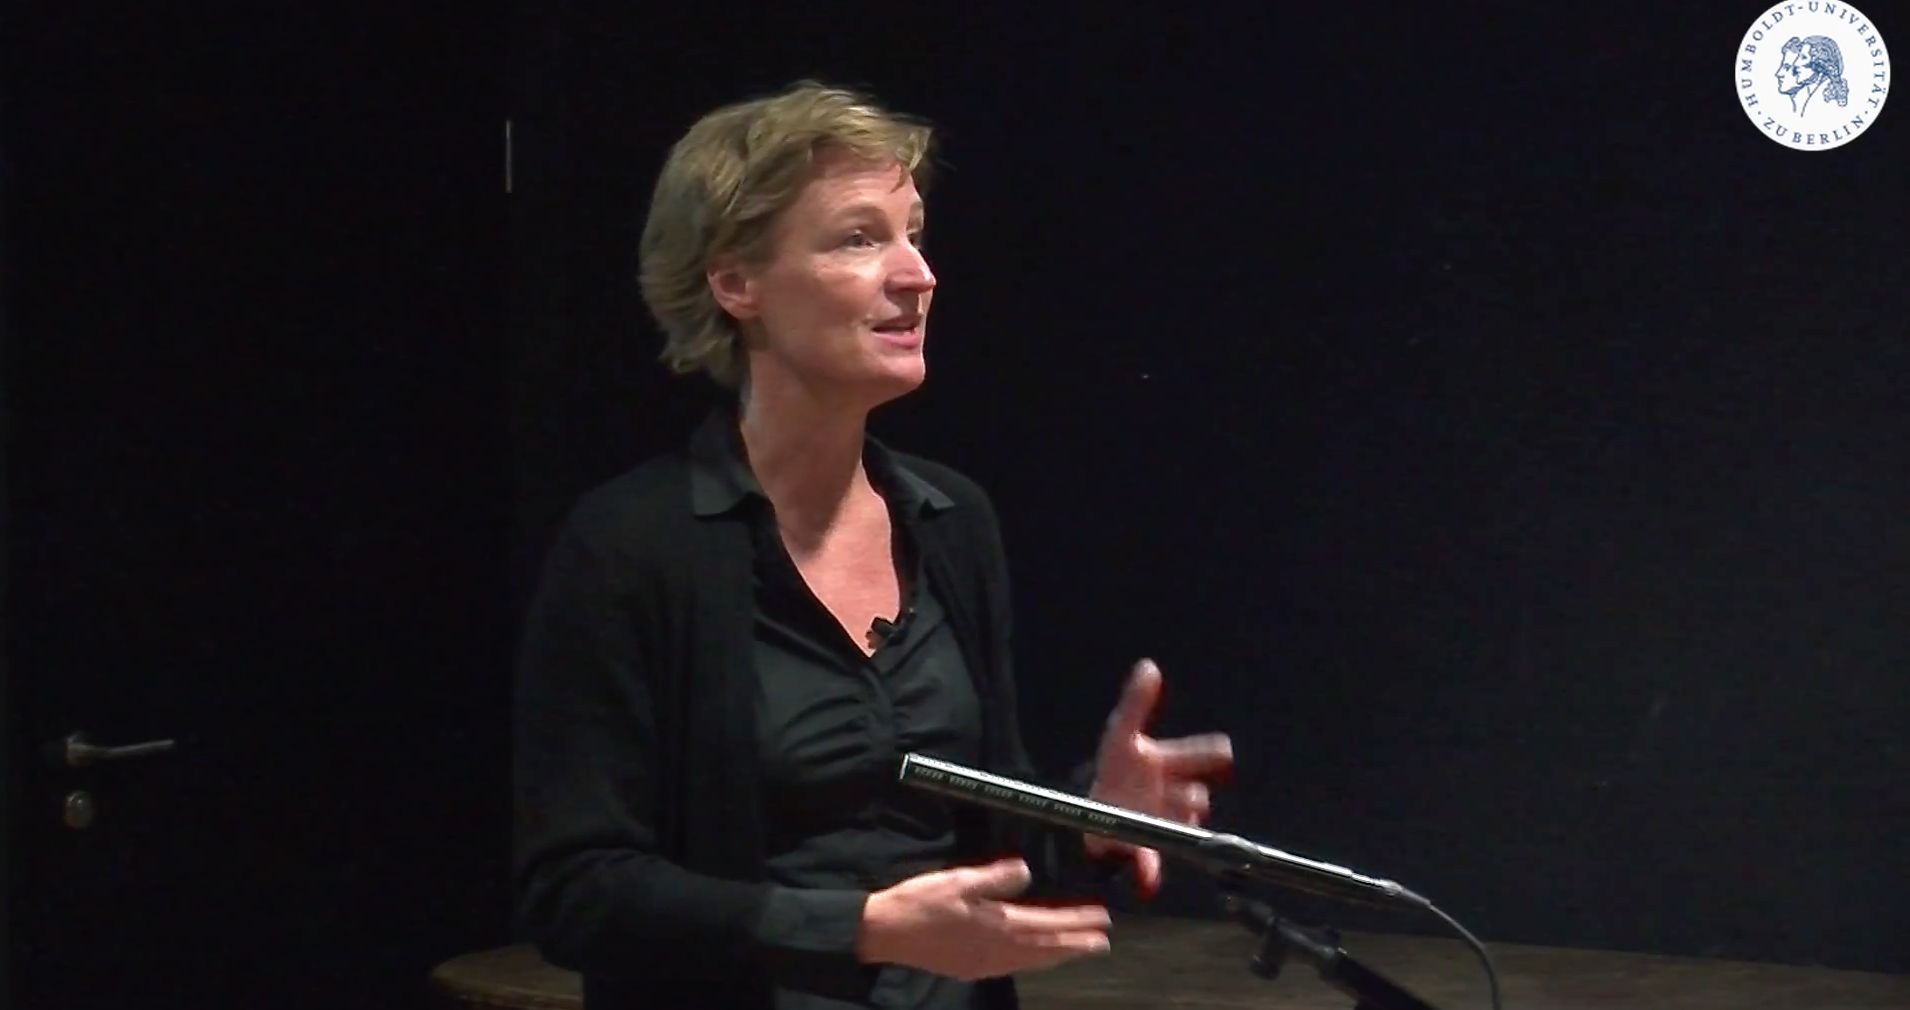 Julia von Winterfeldt: Transformational leadership is needed and it is need...